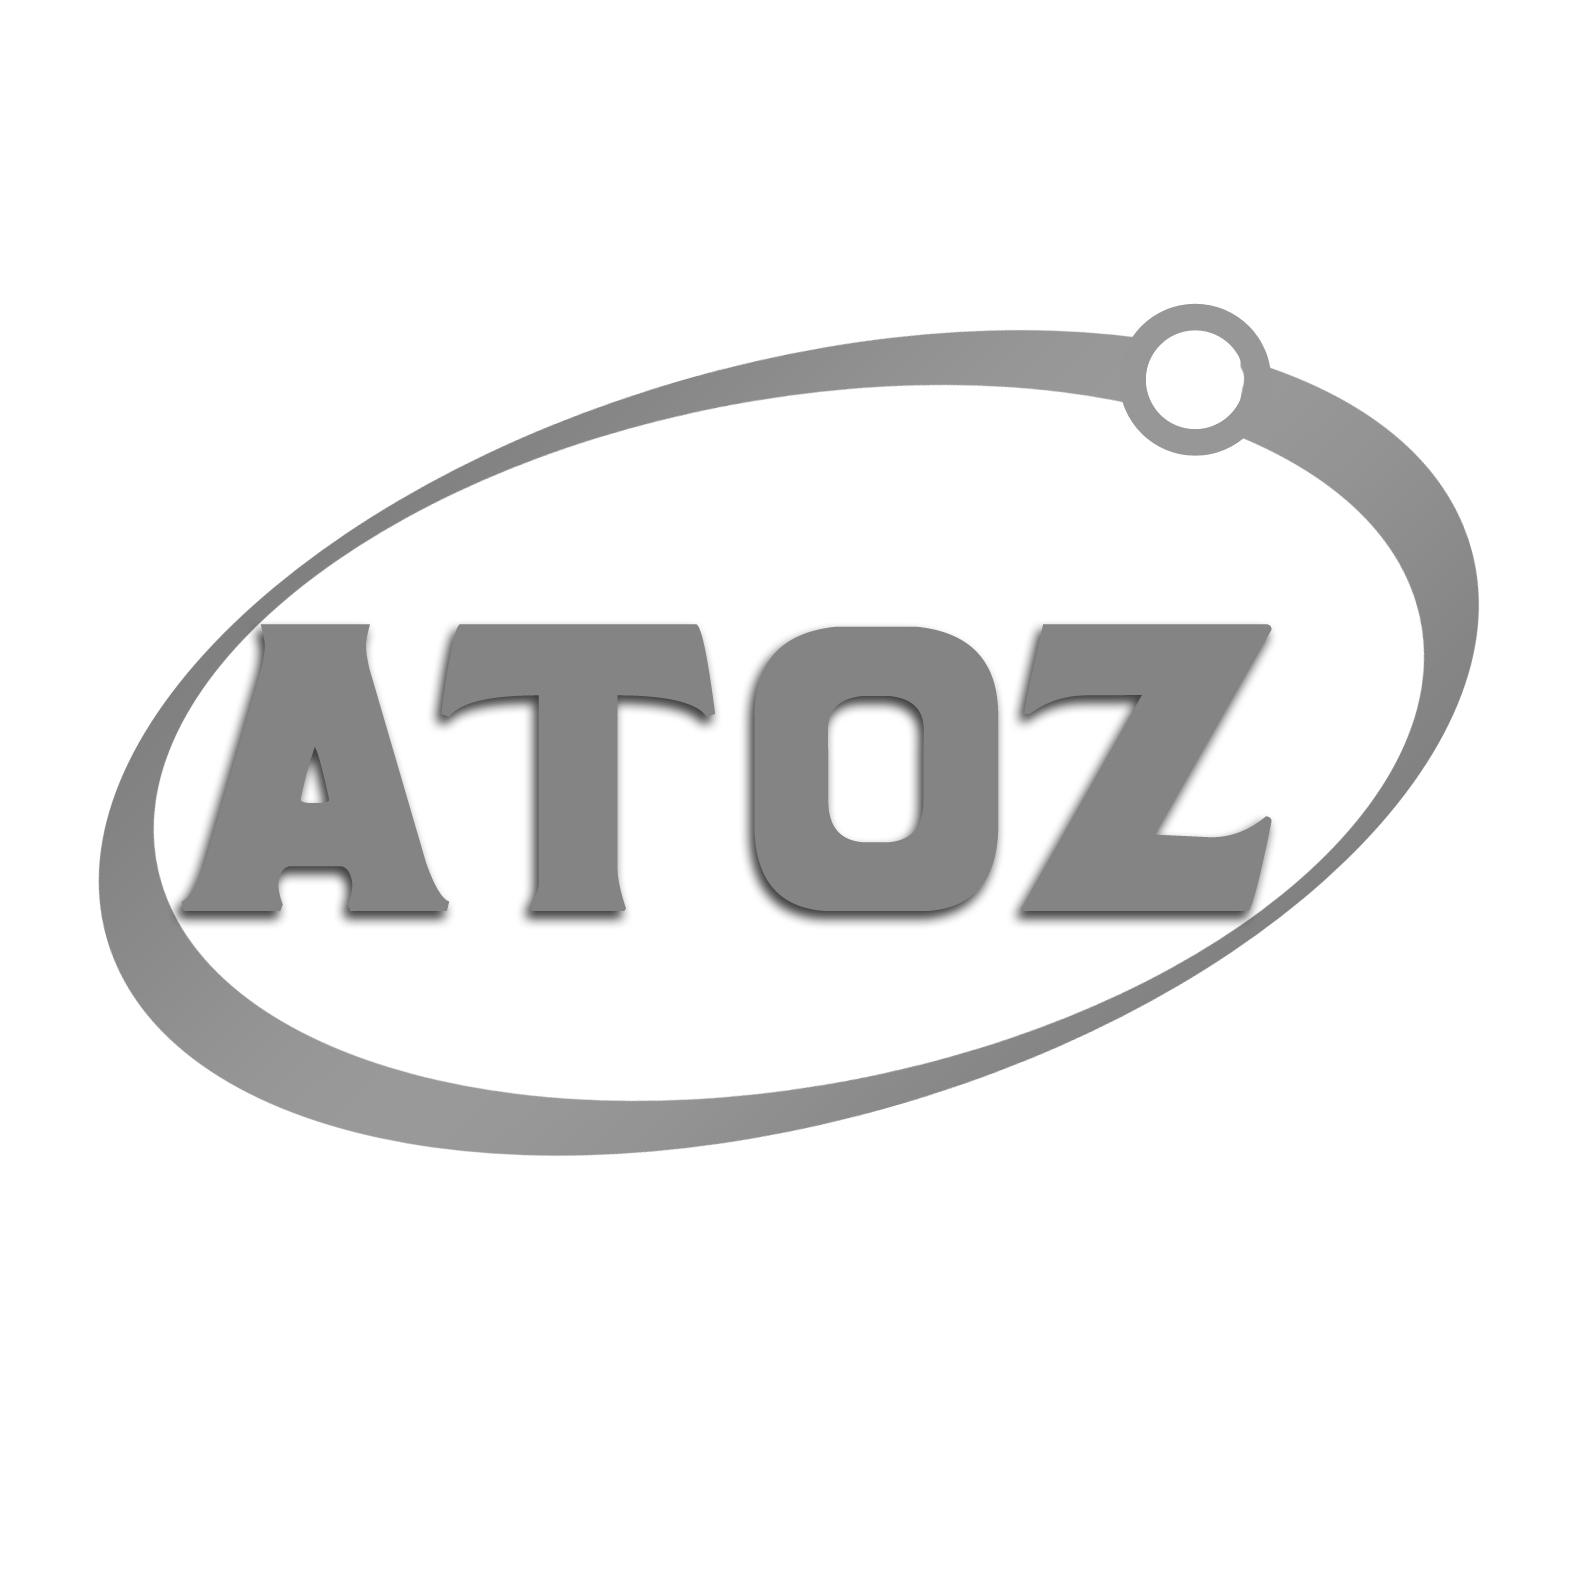 ATOZ人造盆景商标转让费用买卖交易流程